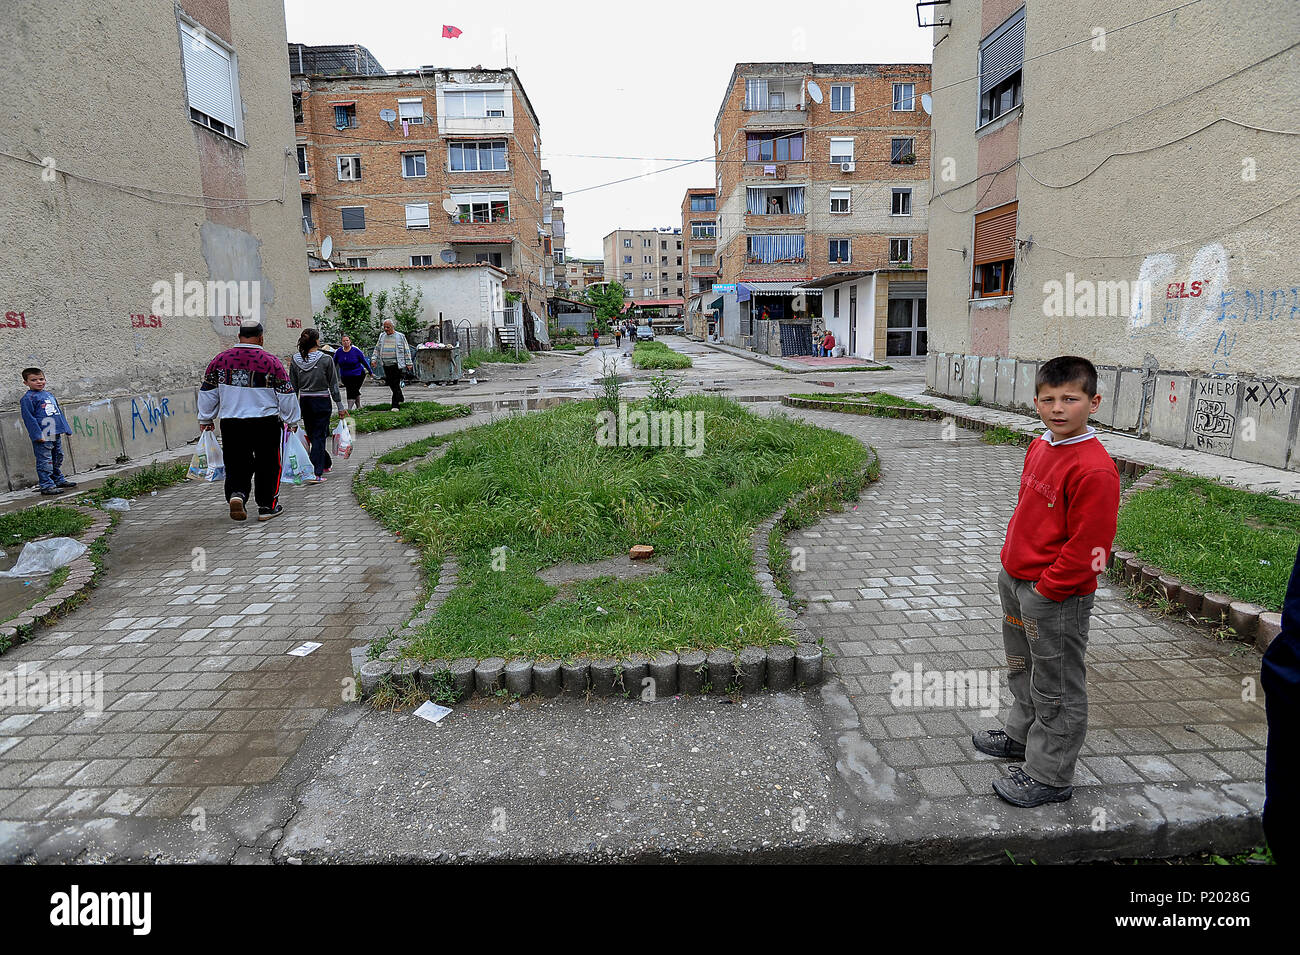 Berat, Albania, residential area with multi-family houses Stock Photo